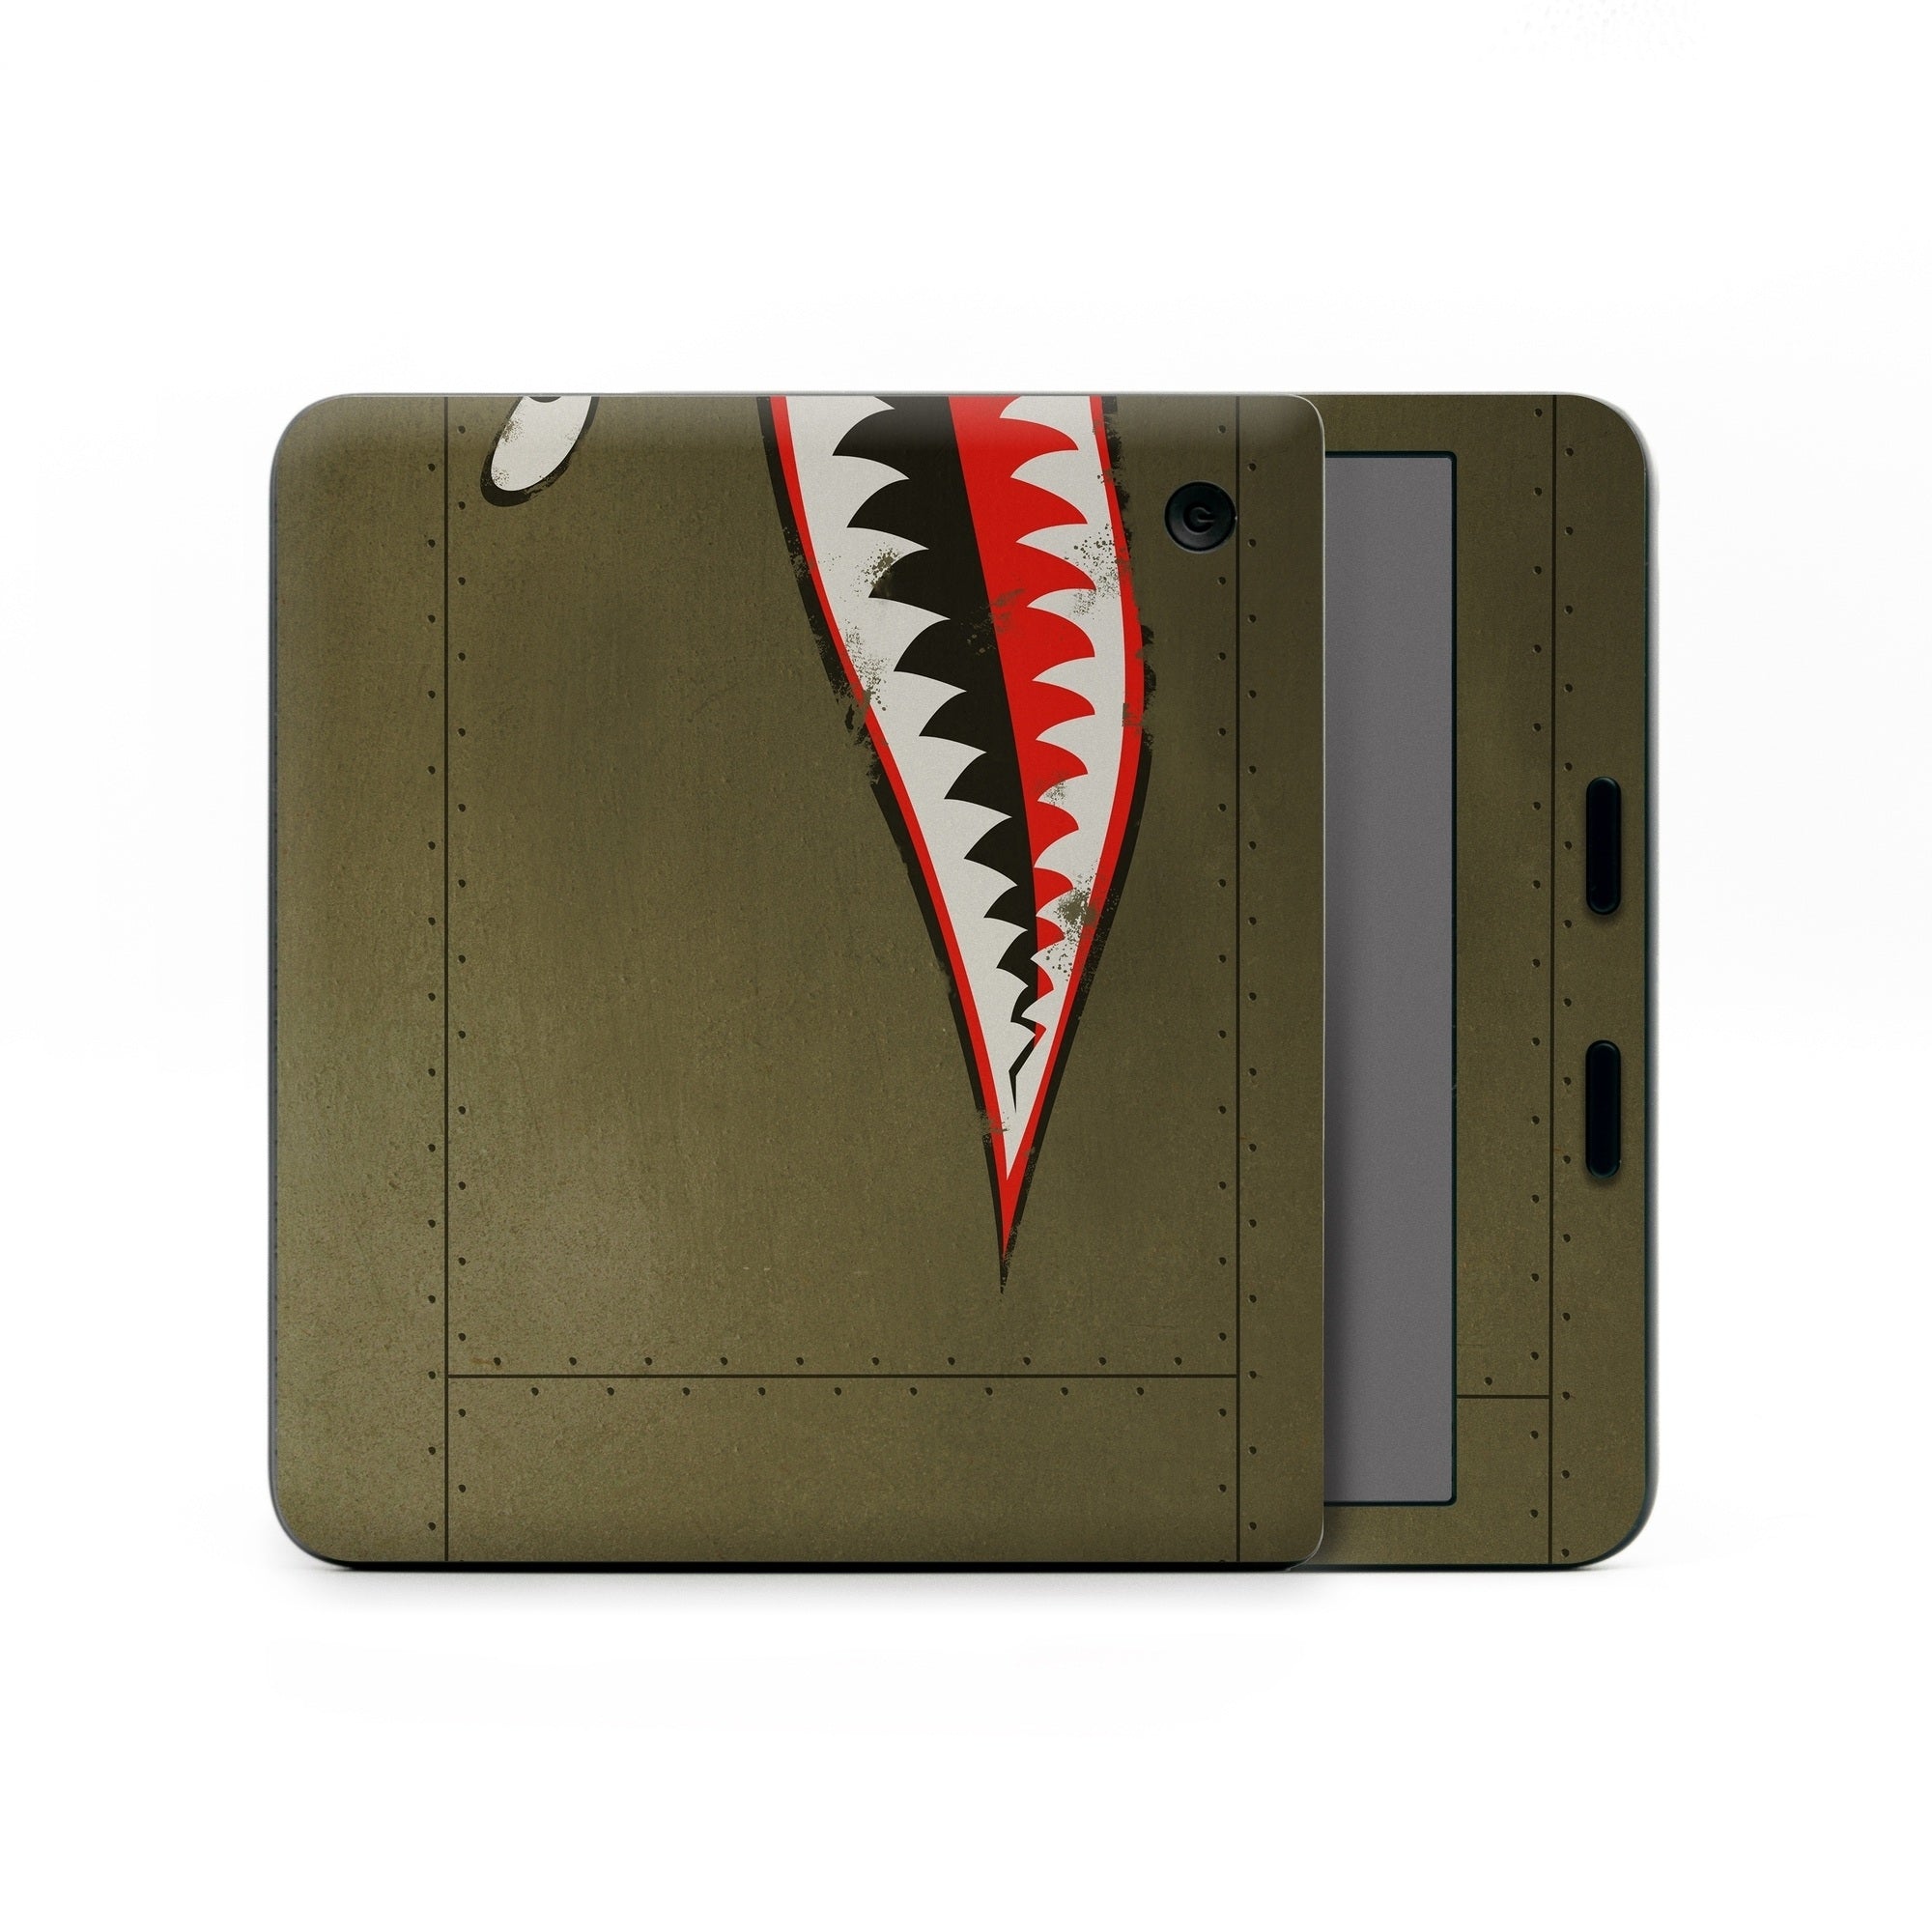 USAF Shark - Kobo Libra Colour Skin